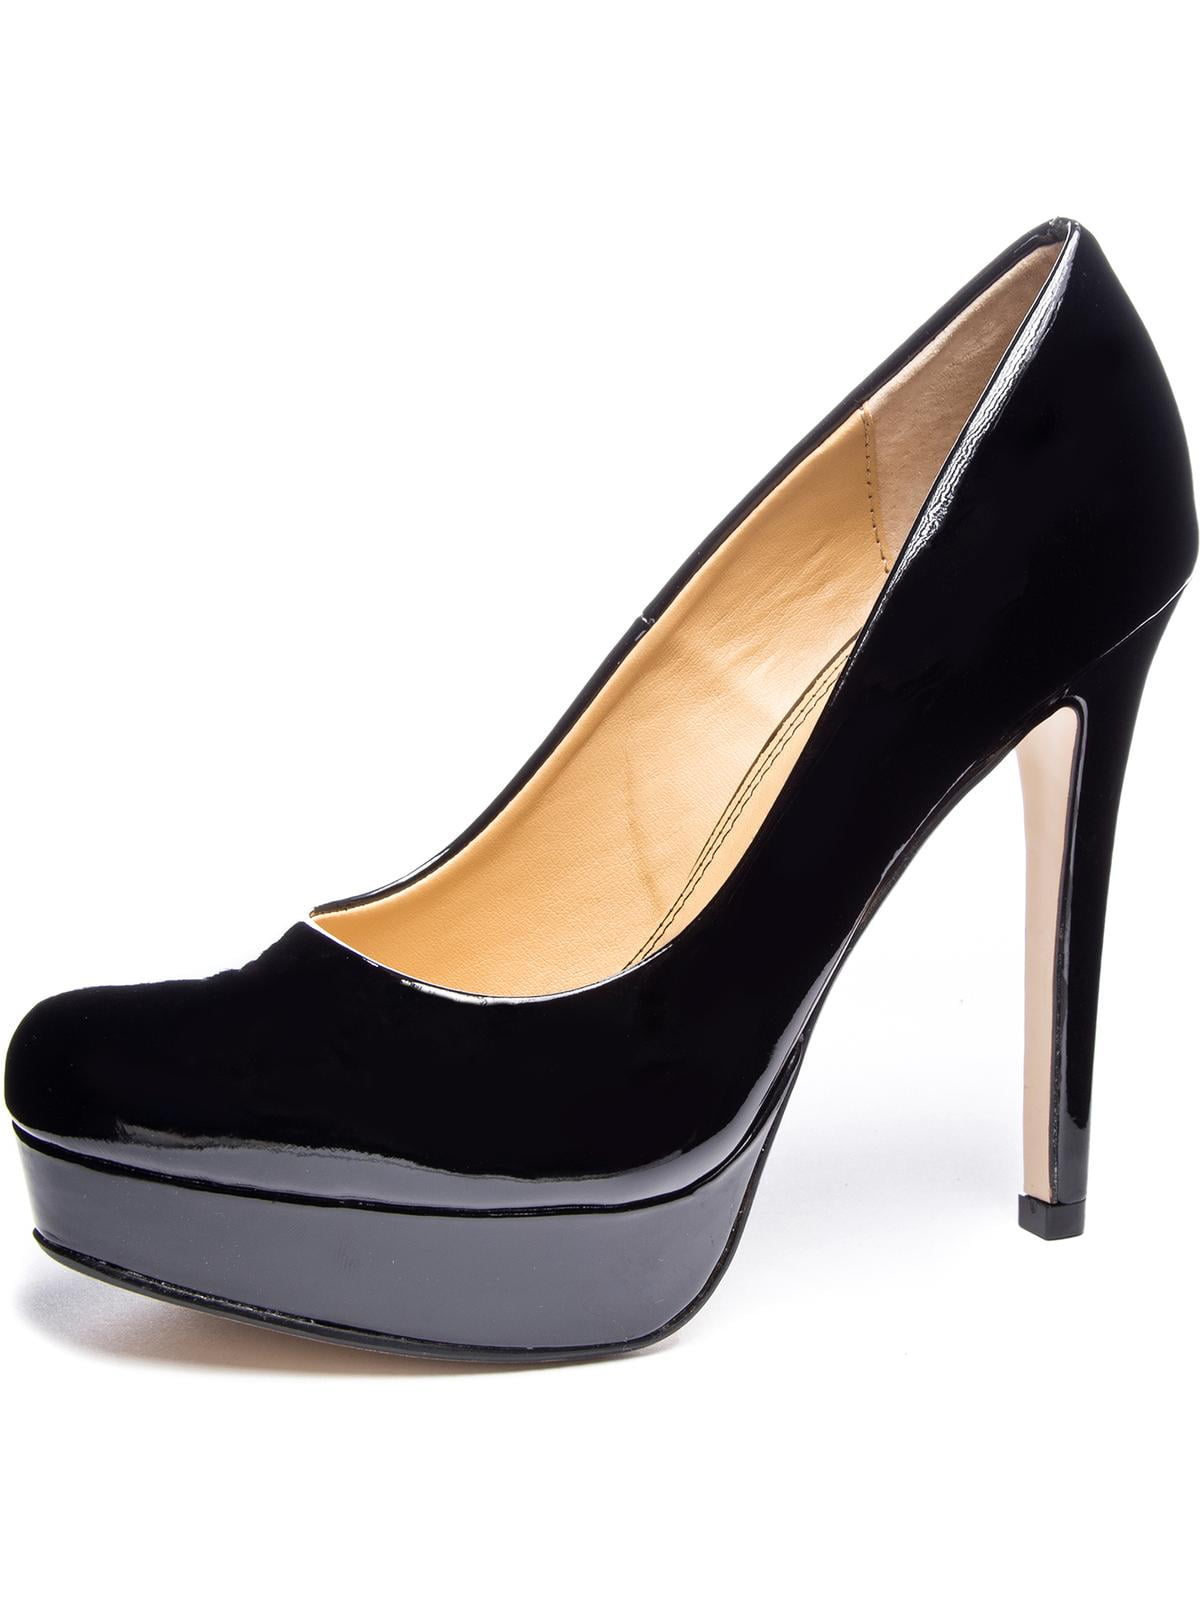 Chinese Laundry Blush Heels Pumps 10M | Blush heels, Pumps heels, Black shoes  heels